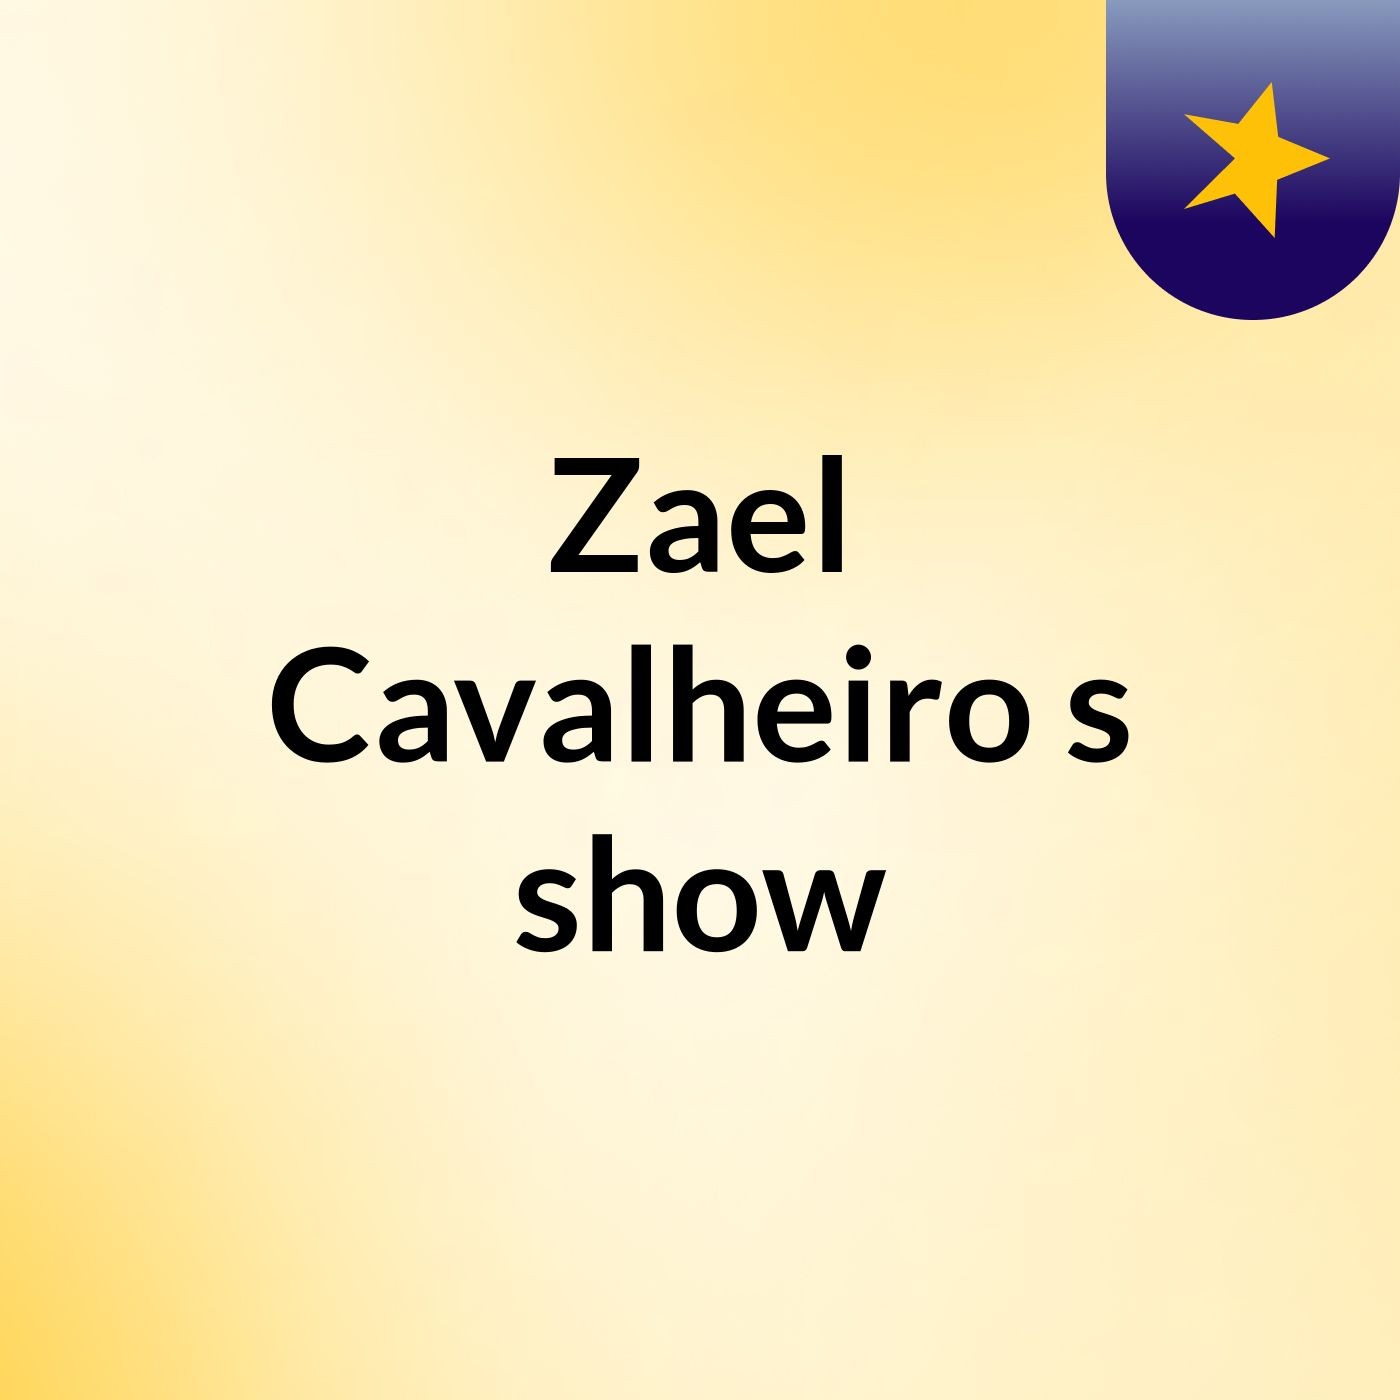 Zael Cavalheiro's show